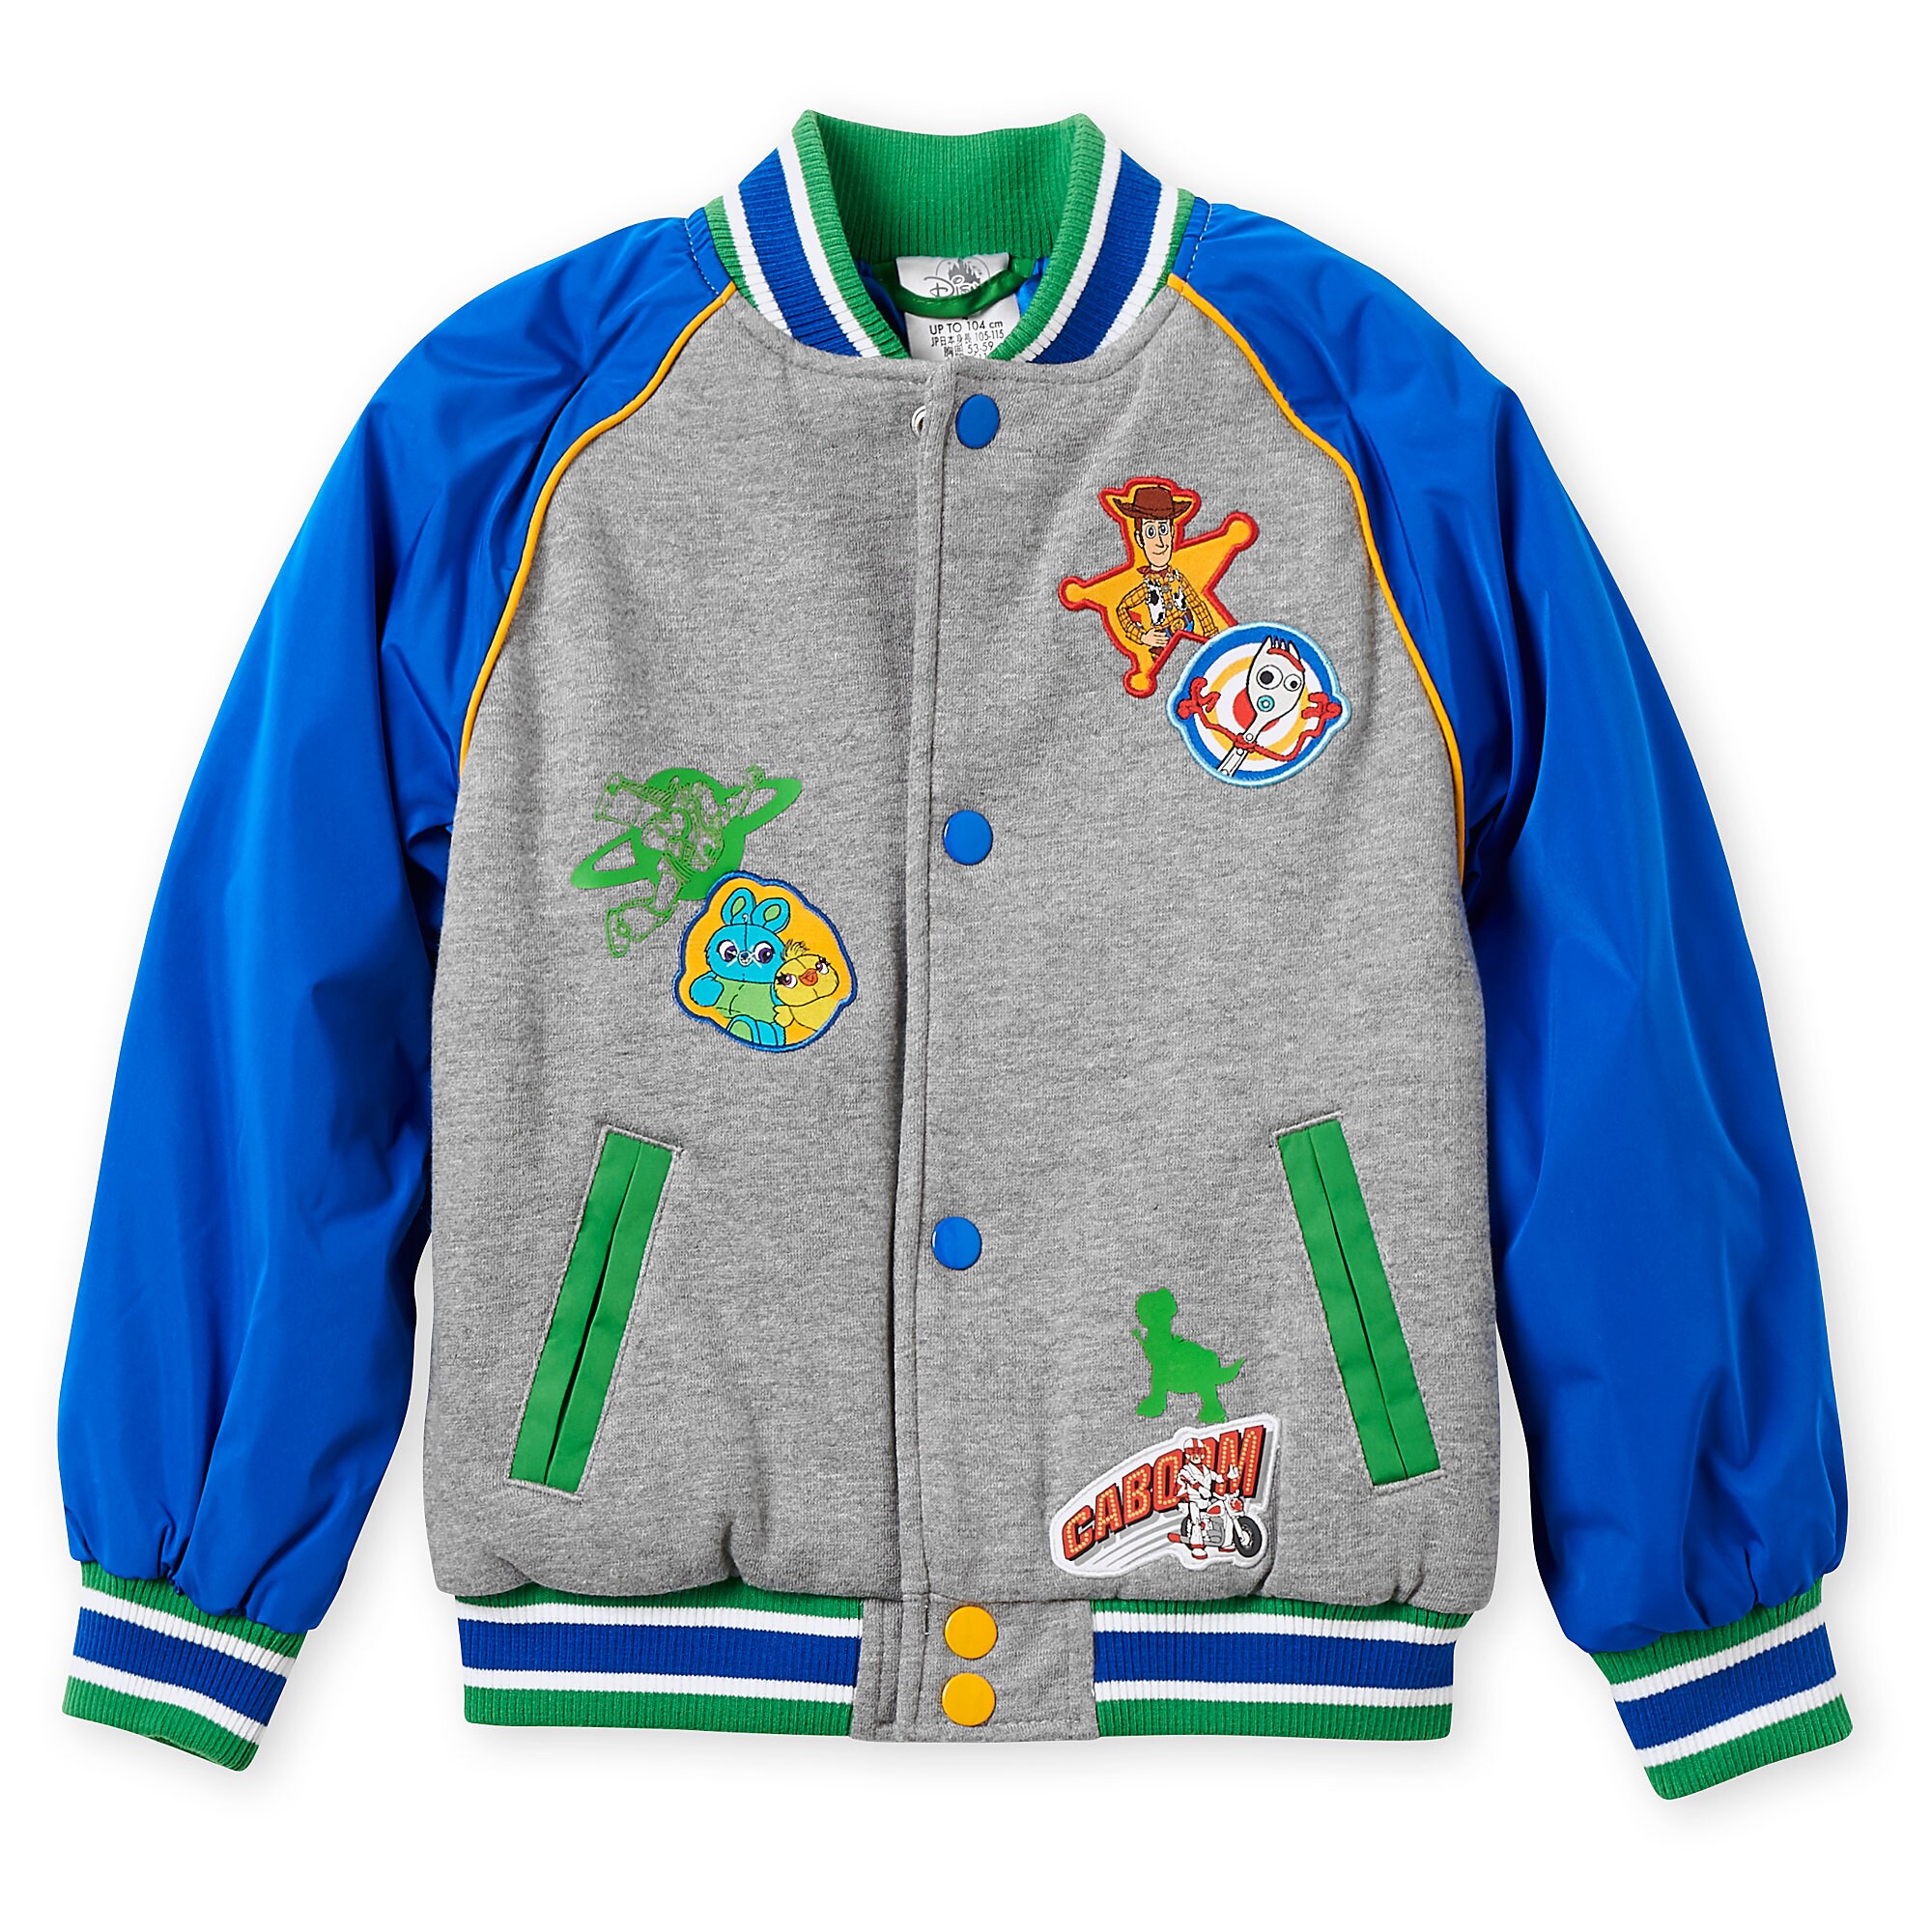 Toy Story 4 Varsity Jacket for Boys - Personalized